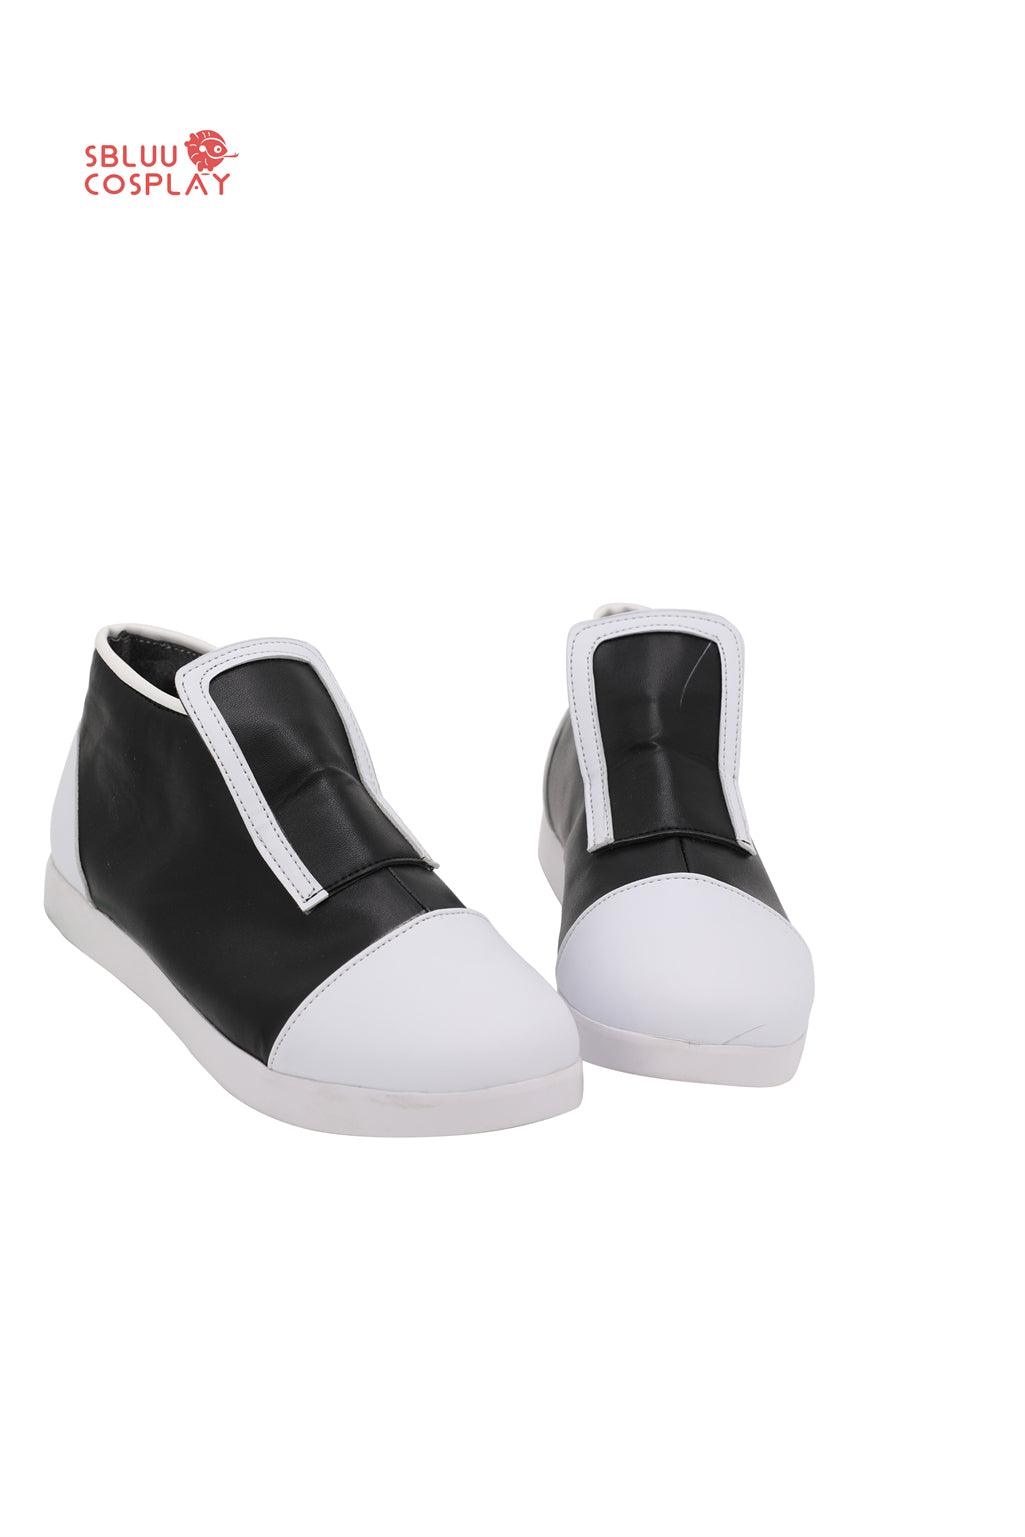 Kemono Jihen Kusaka Kabane Cosplay Shoes Custom Made Boots - SBluuCosplay